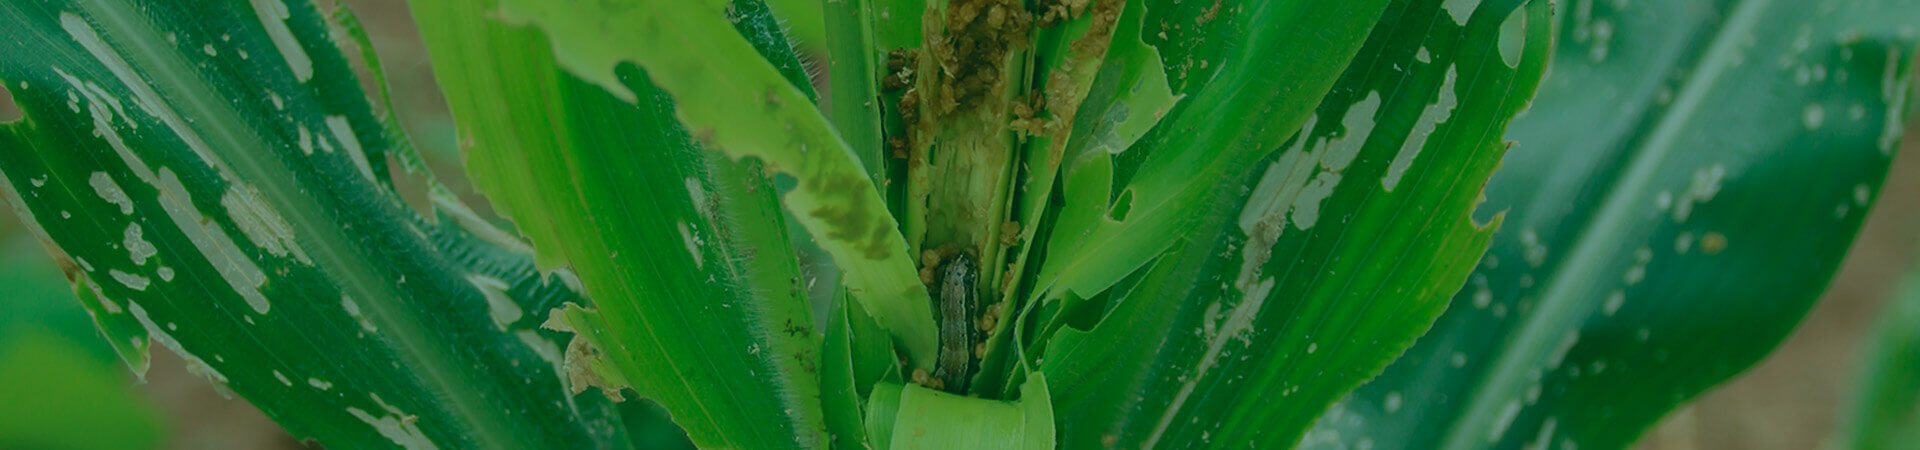 Manejo Integrado da Spodoptera frugiperda no milho